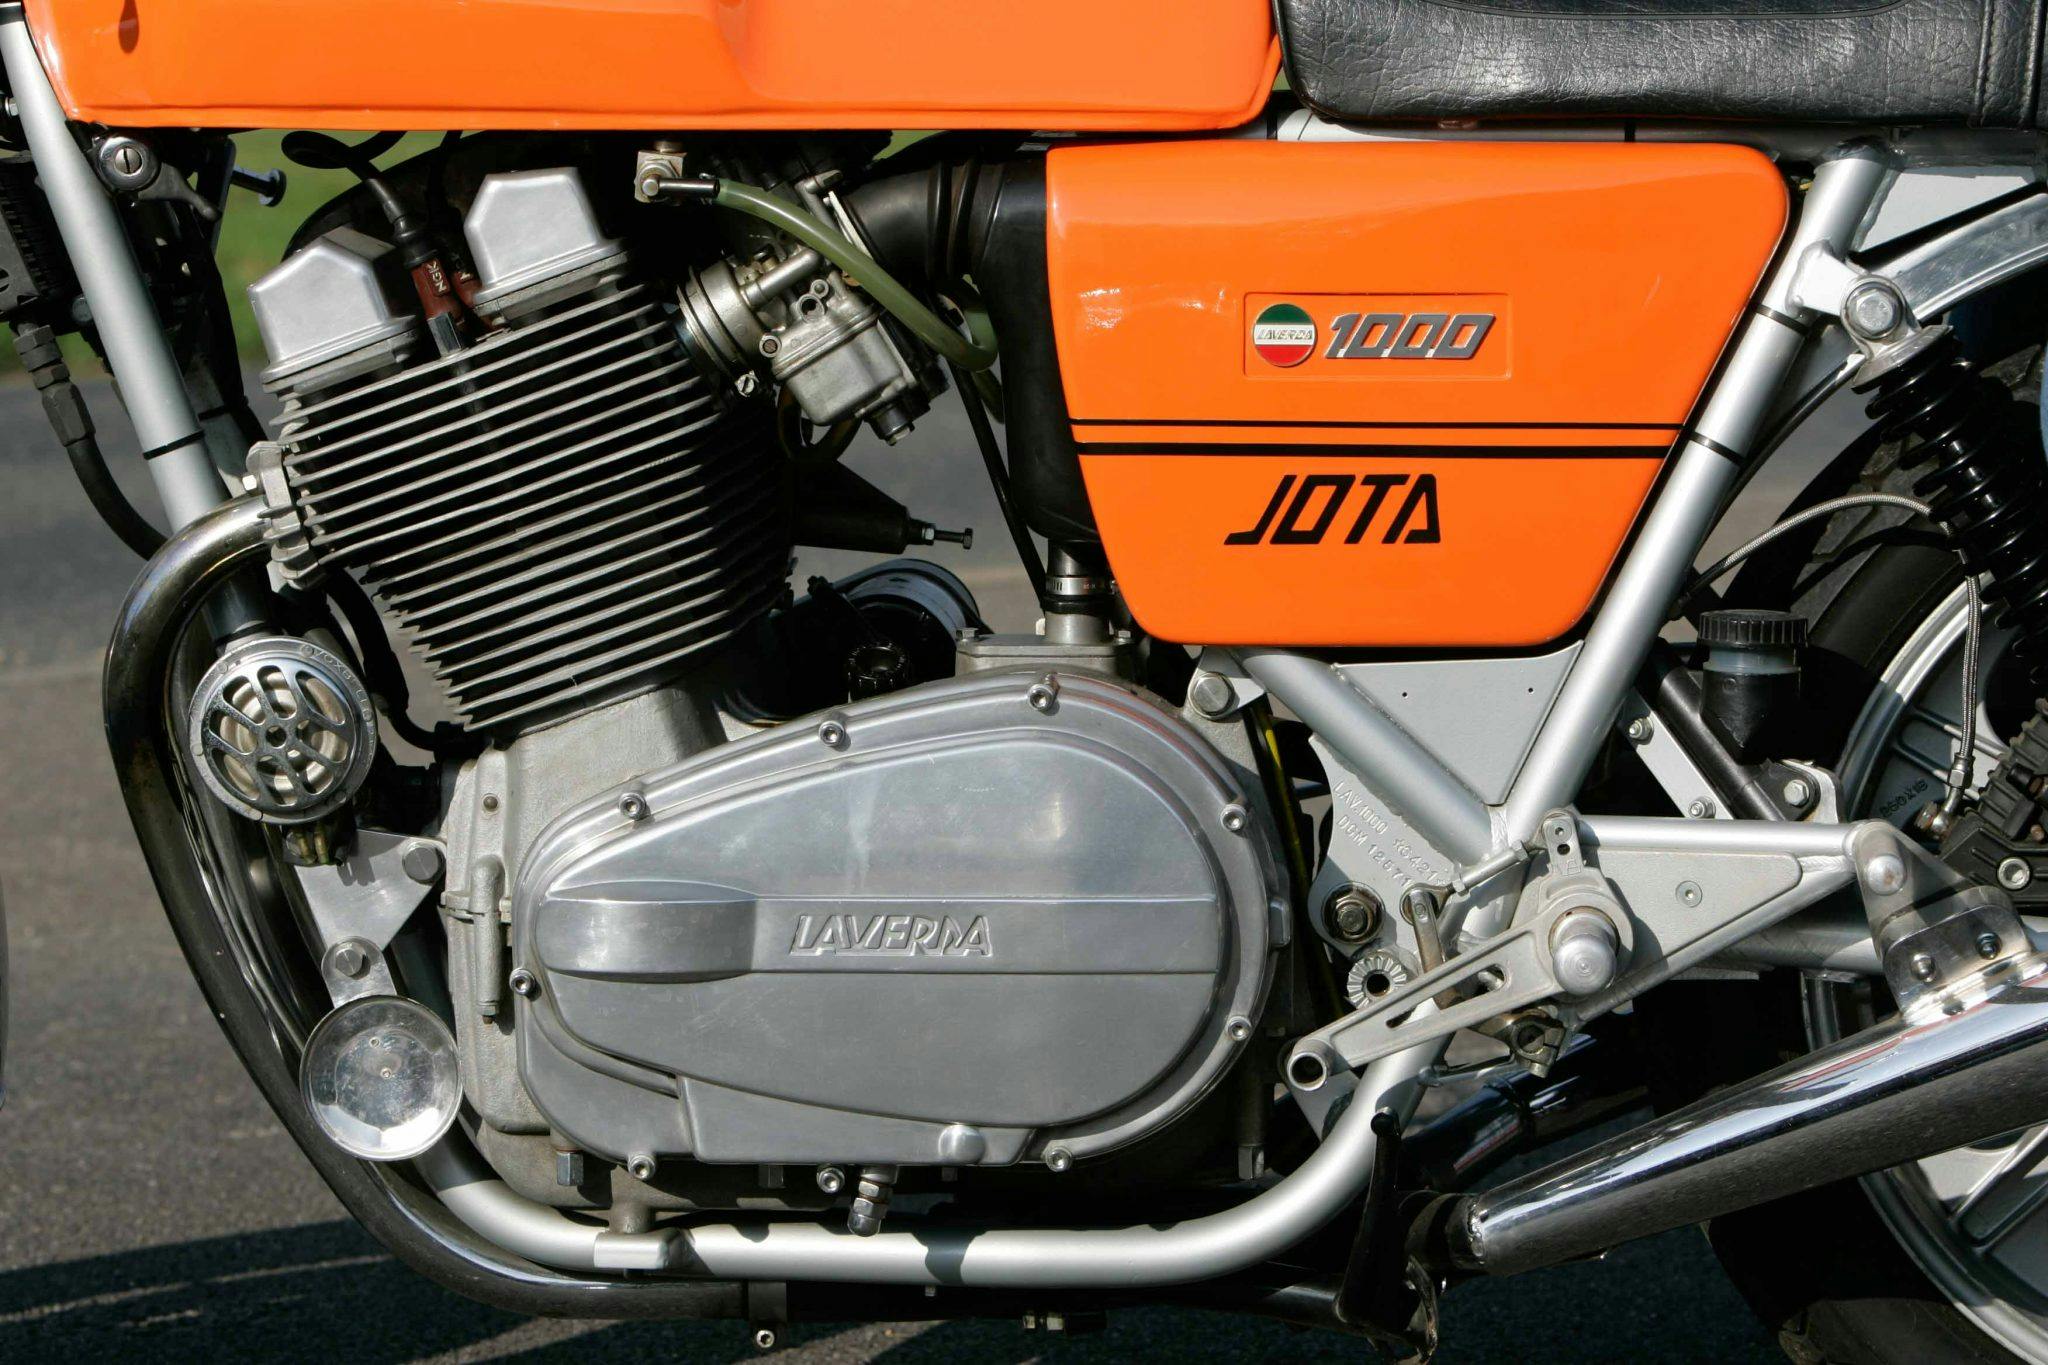 Laverda Jota motorcycle engine